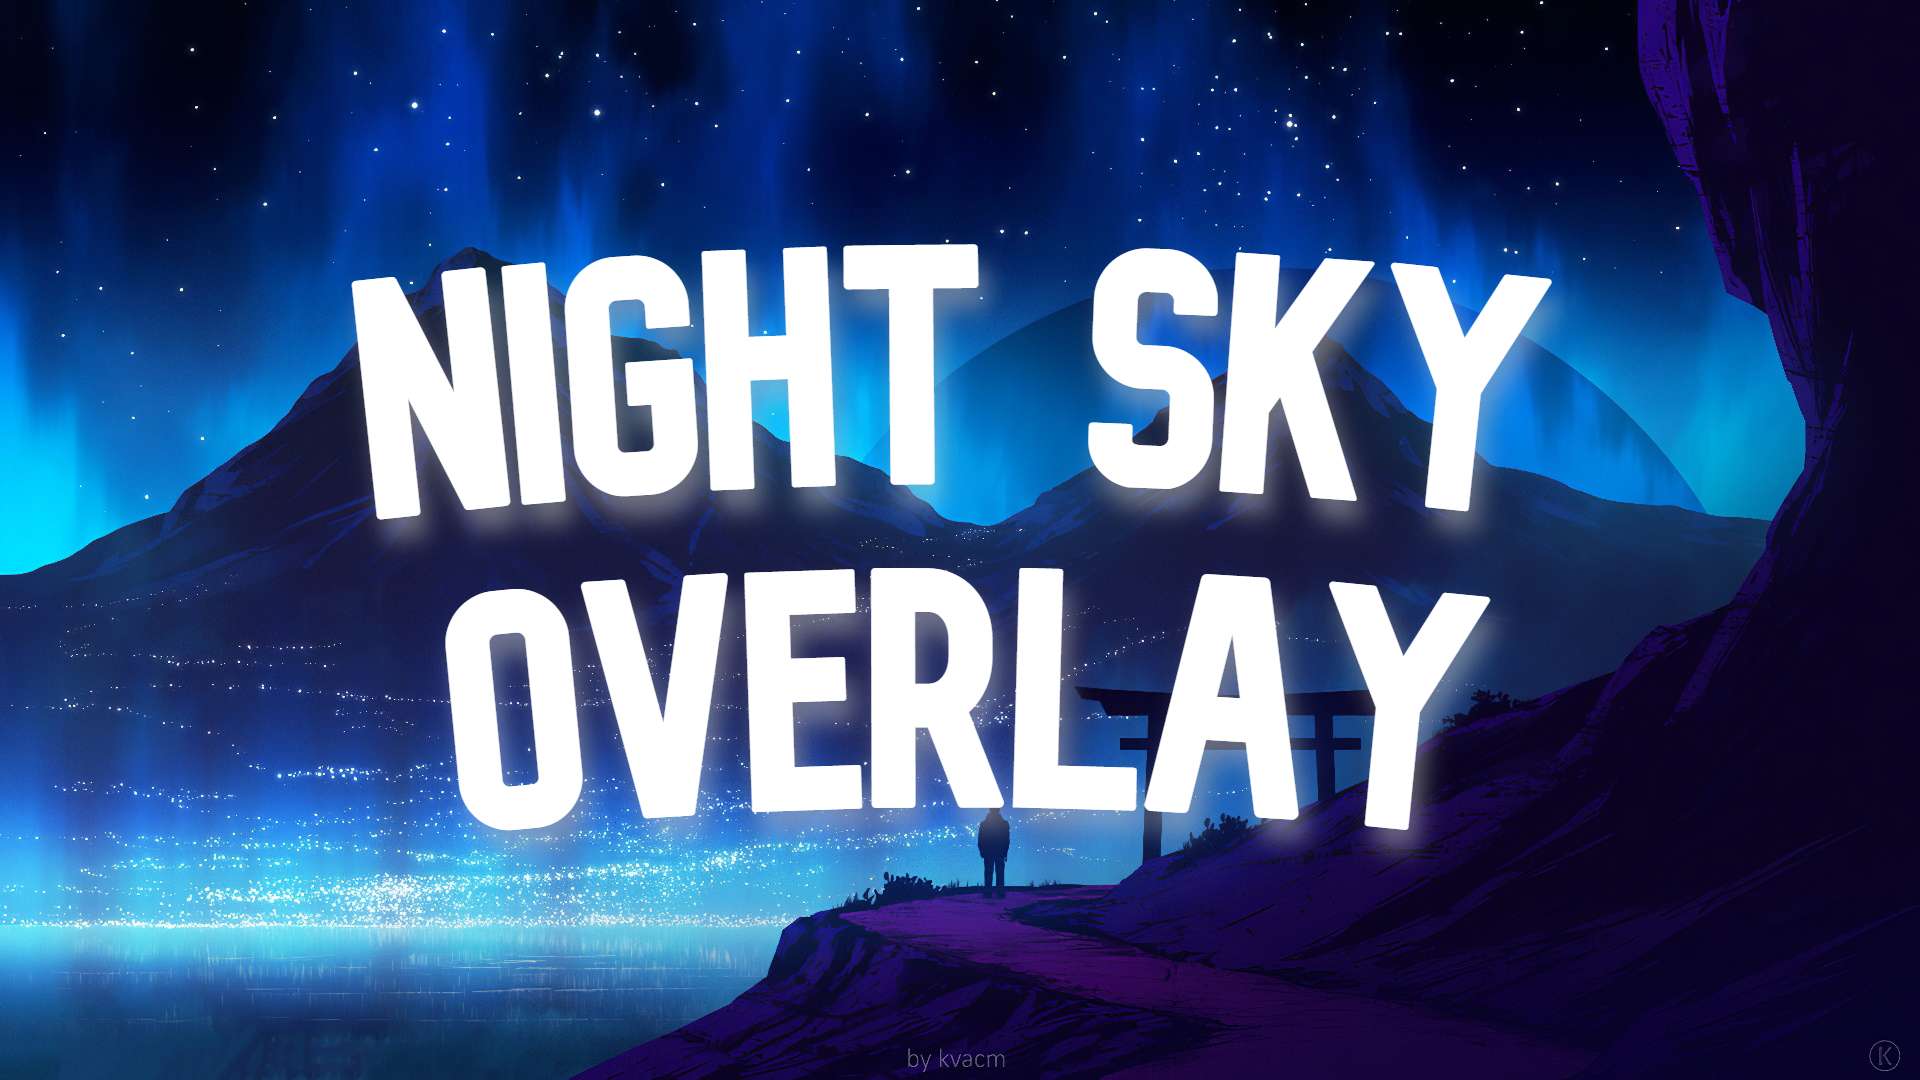 Night Sky Overlay #15 16x by rh56 on PvPRP